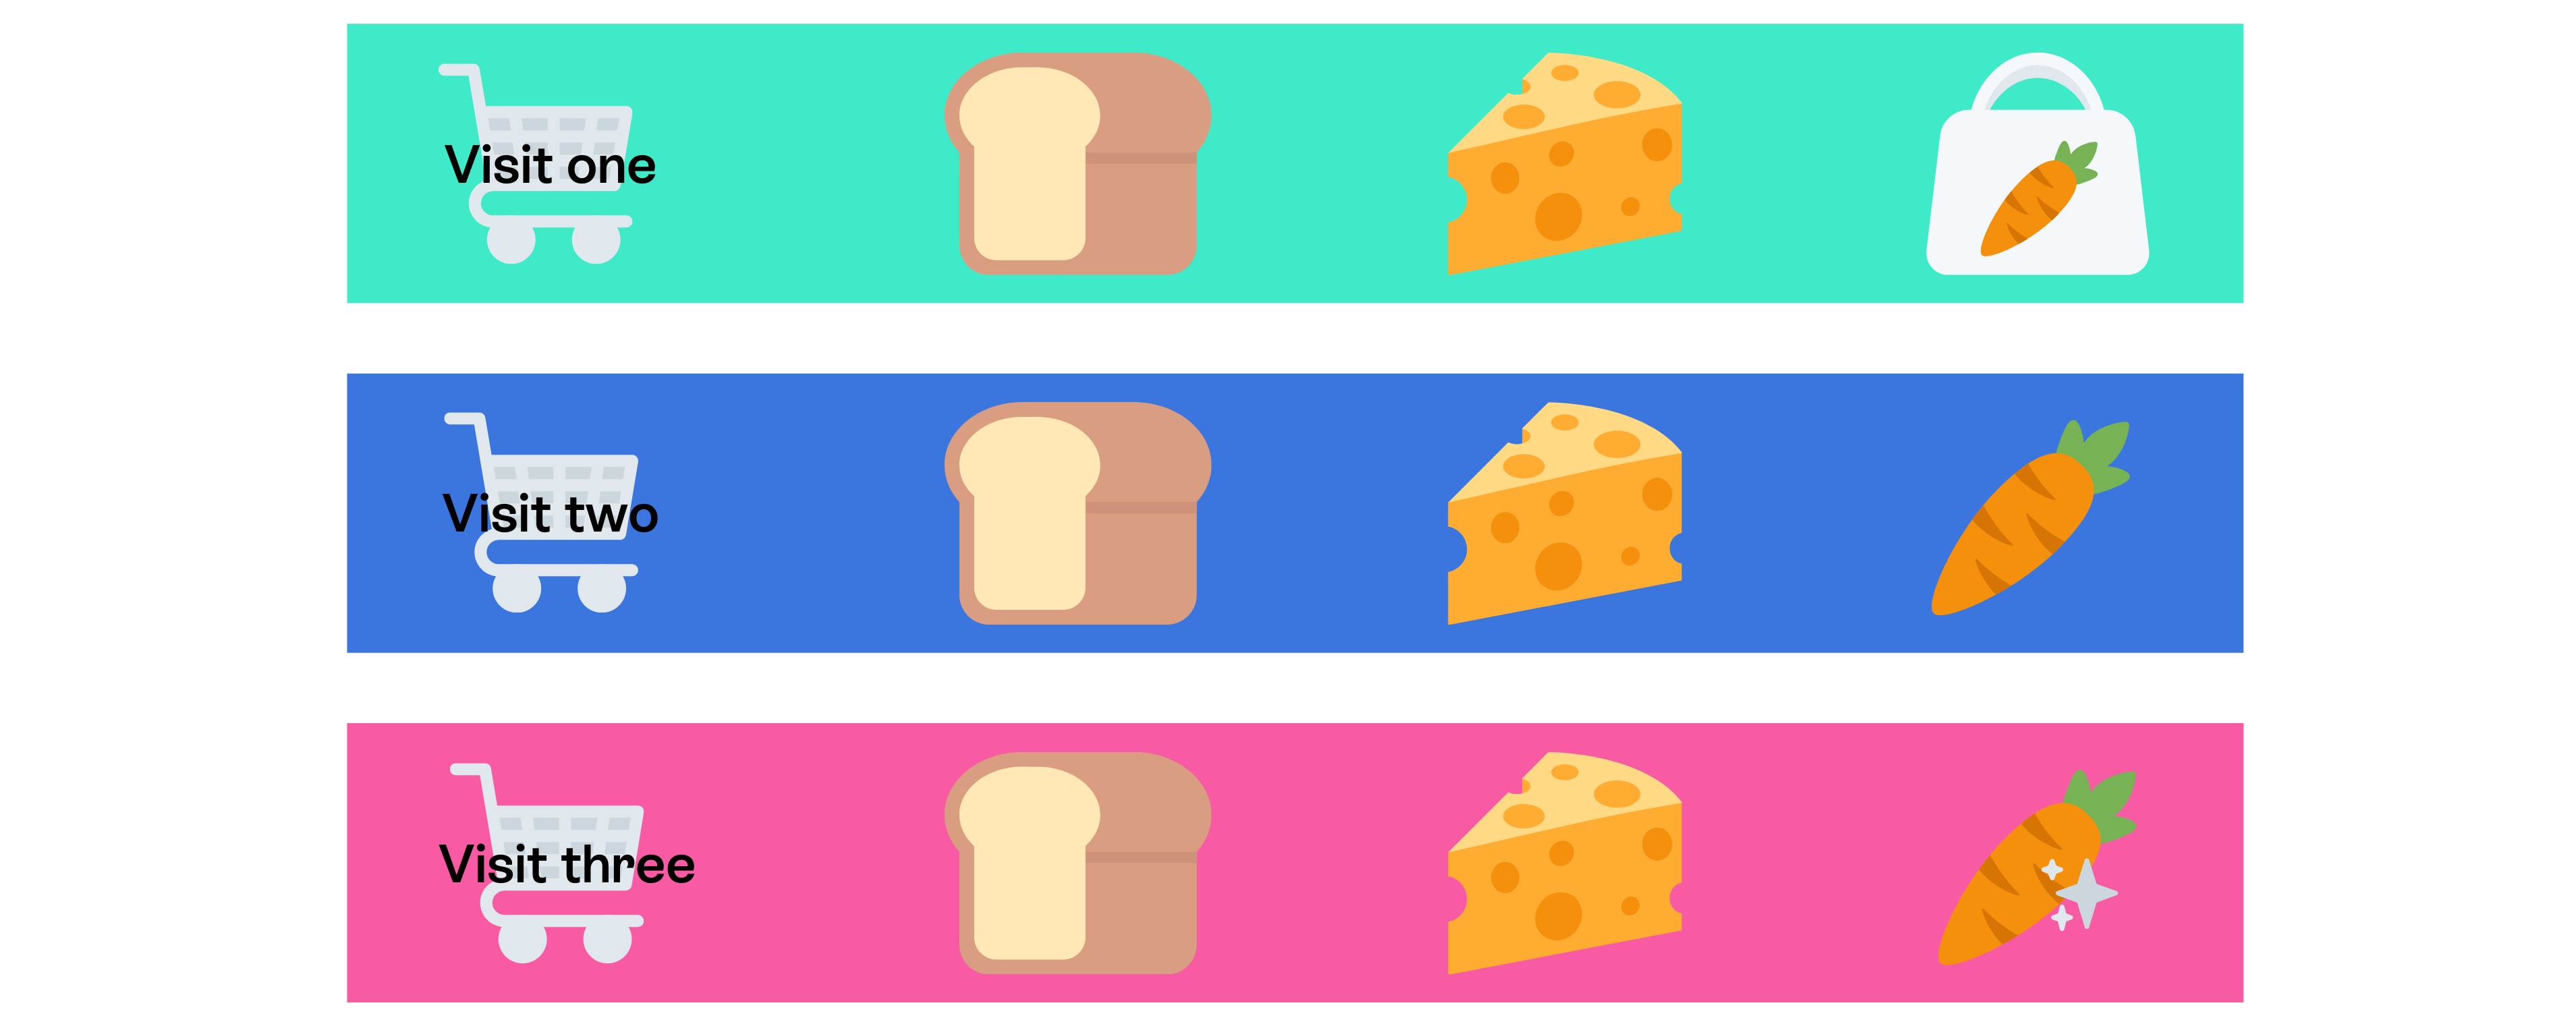 Illustration using emojis to represent three different supermarket visits.